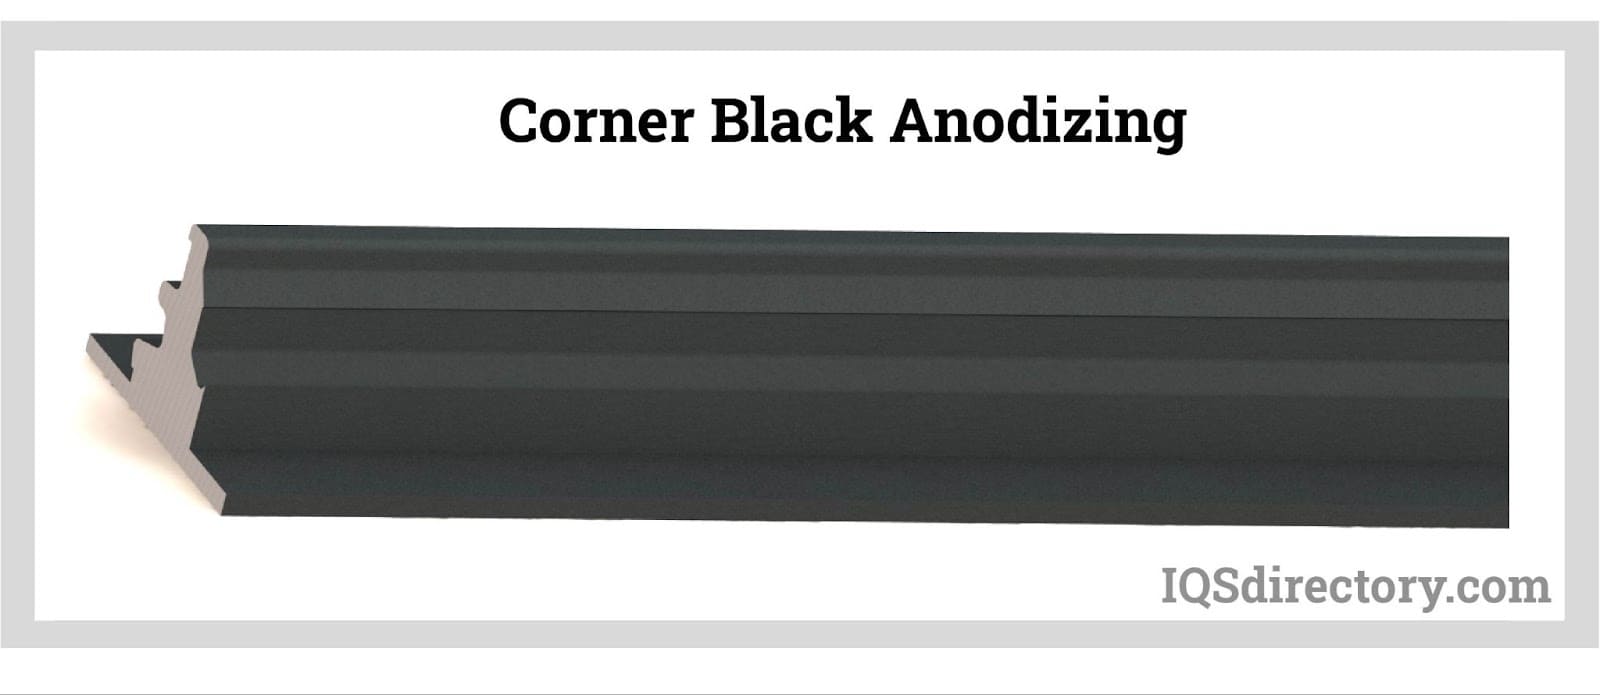 Corner Black Anodizing